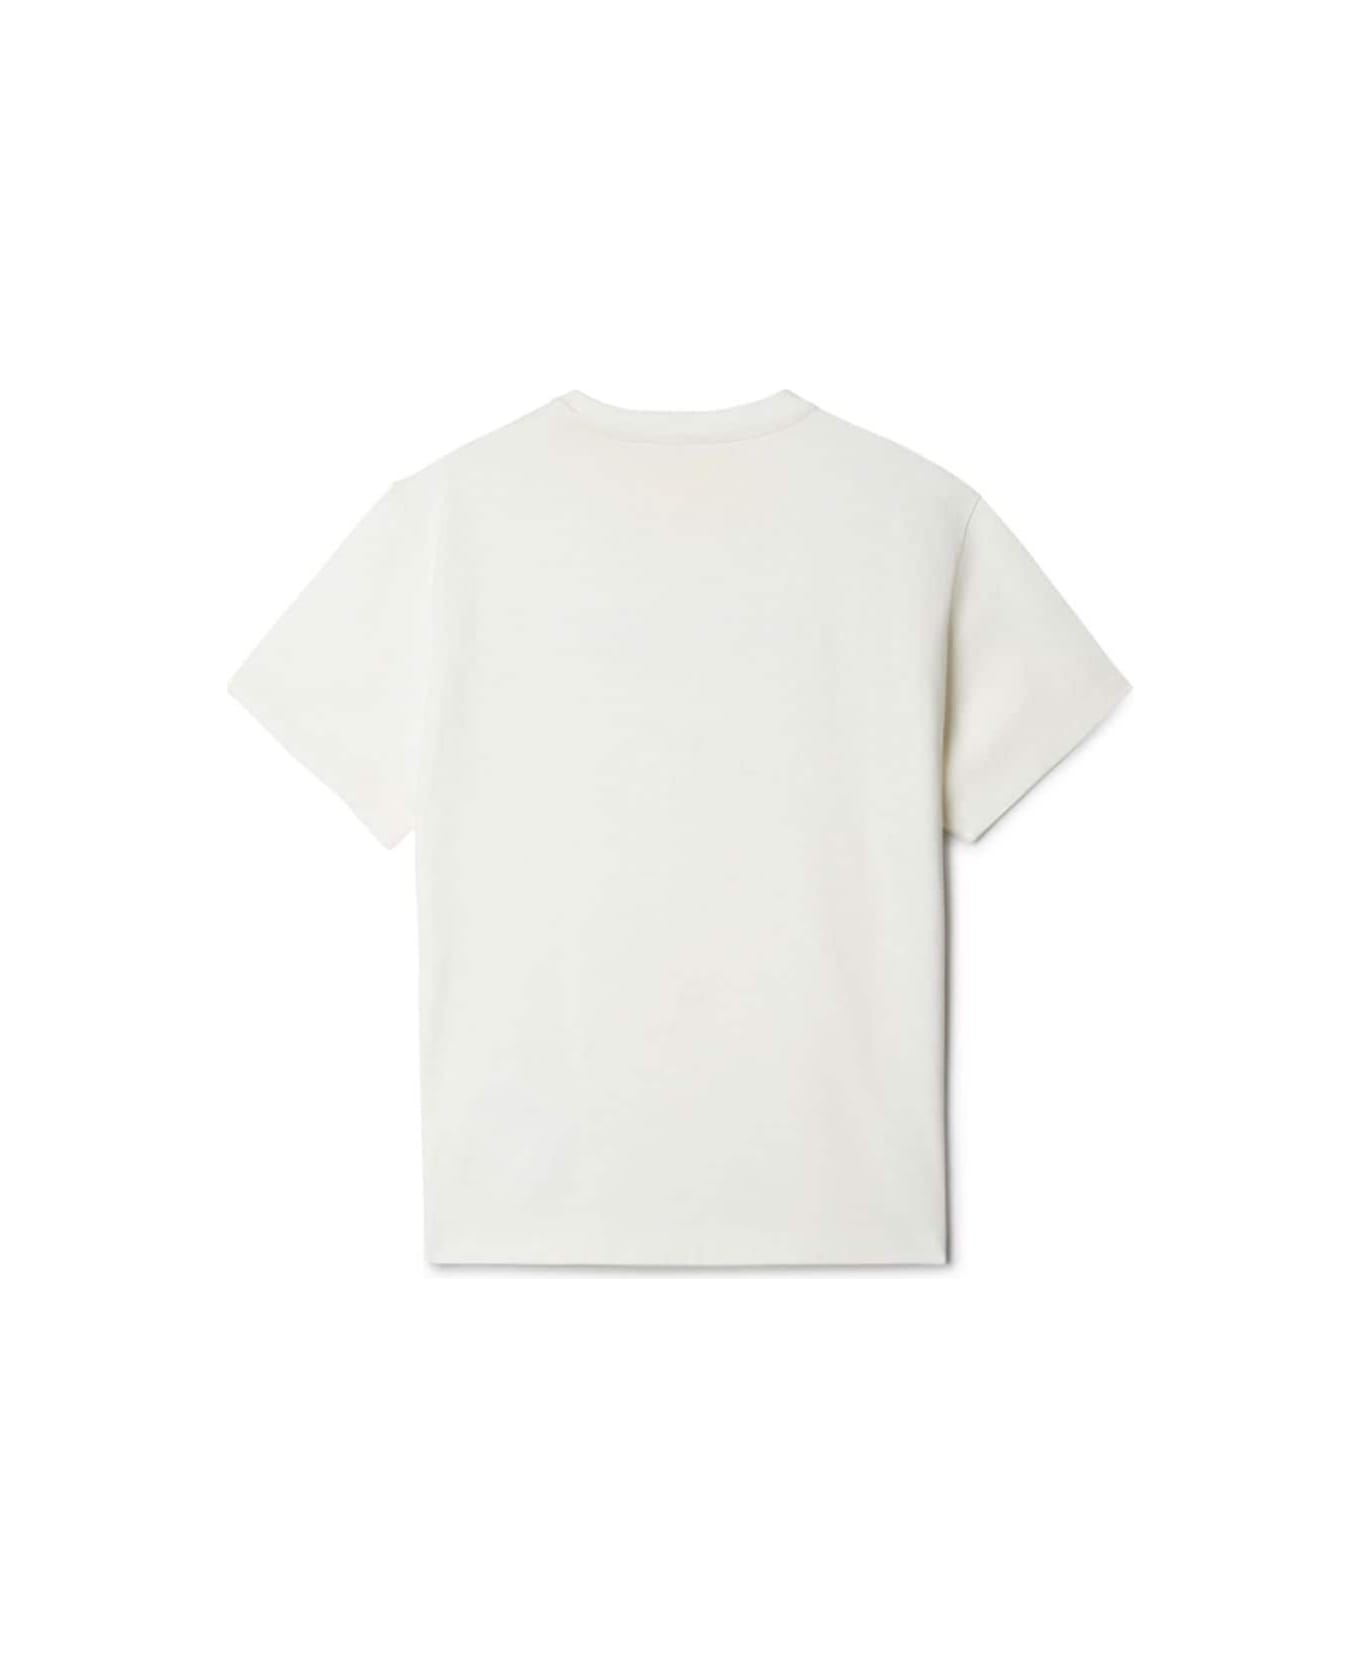 Off-White White T-shirt With Logo In Cotton Boy - White